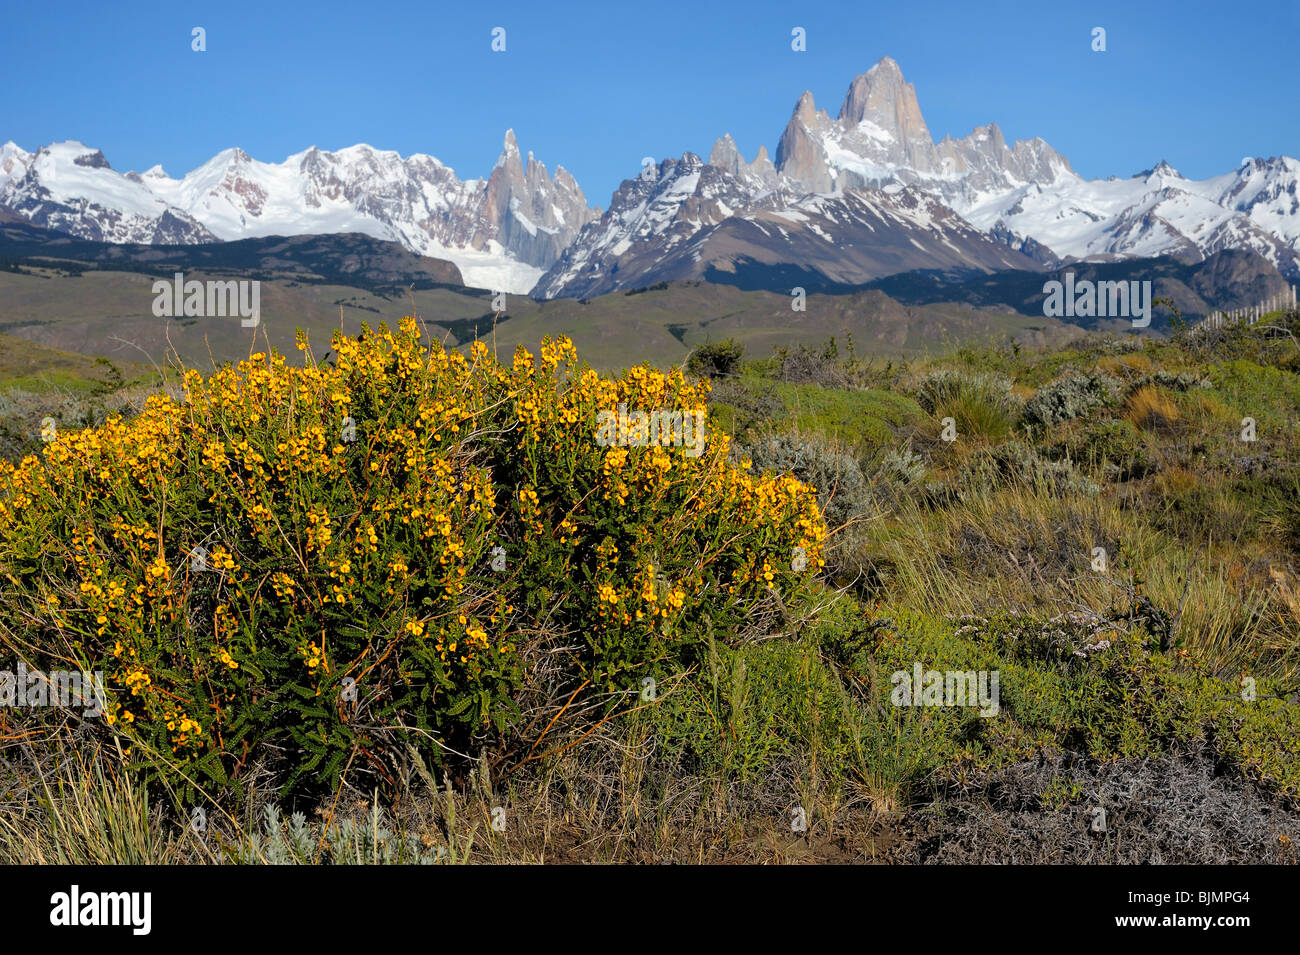 Mt. Cerro Torre and Mt. Fitz Roy, El Chalten, Andes, Patagonia, Argentina, South America Stock Photo